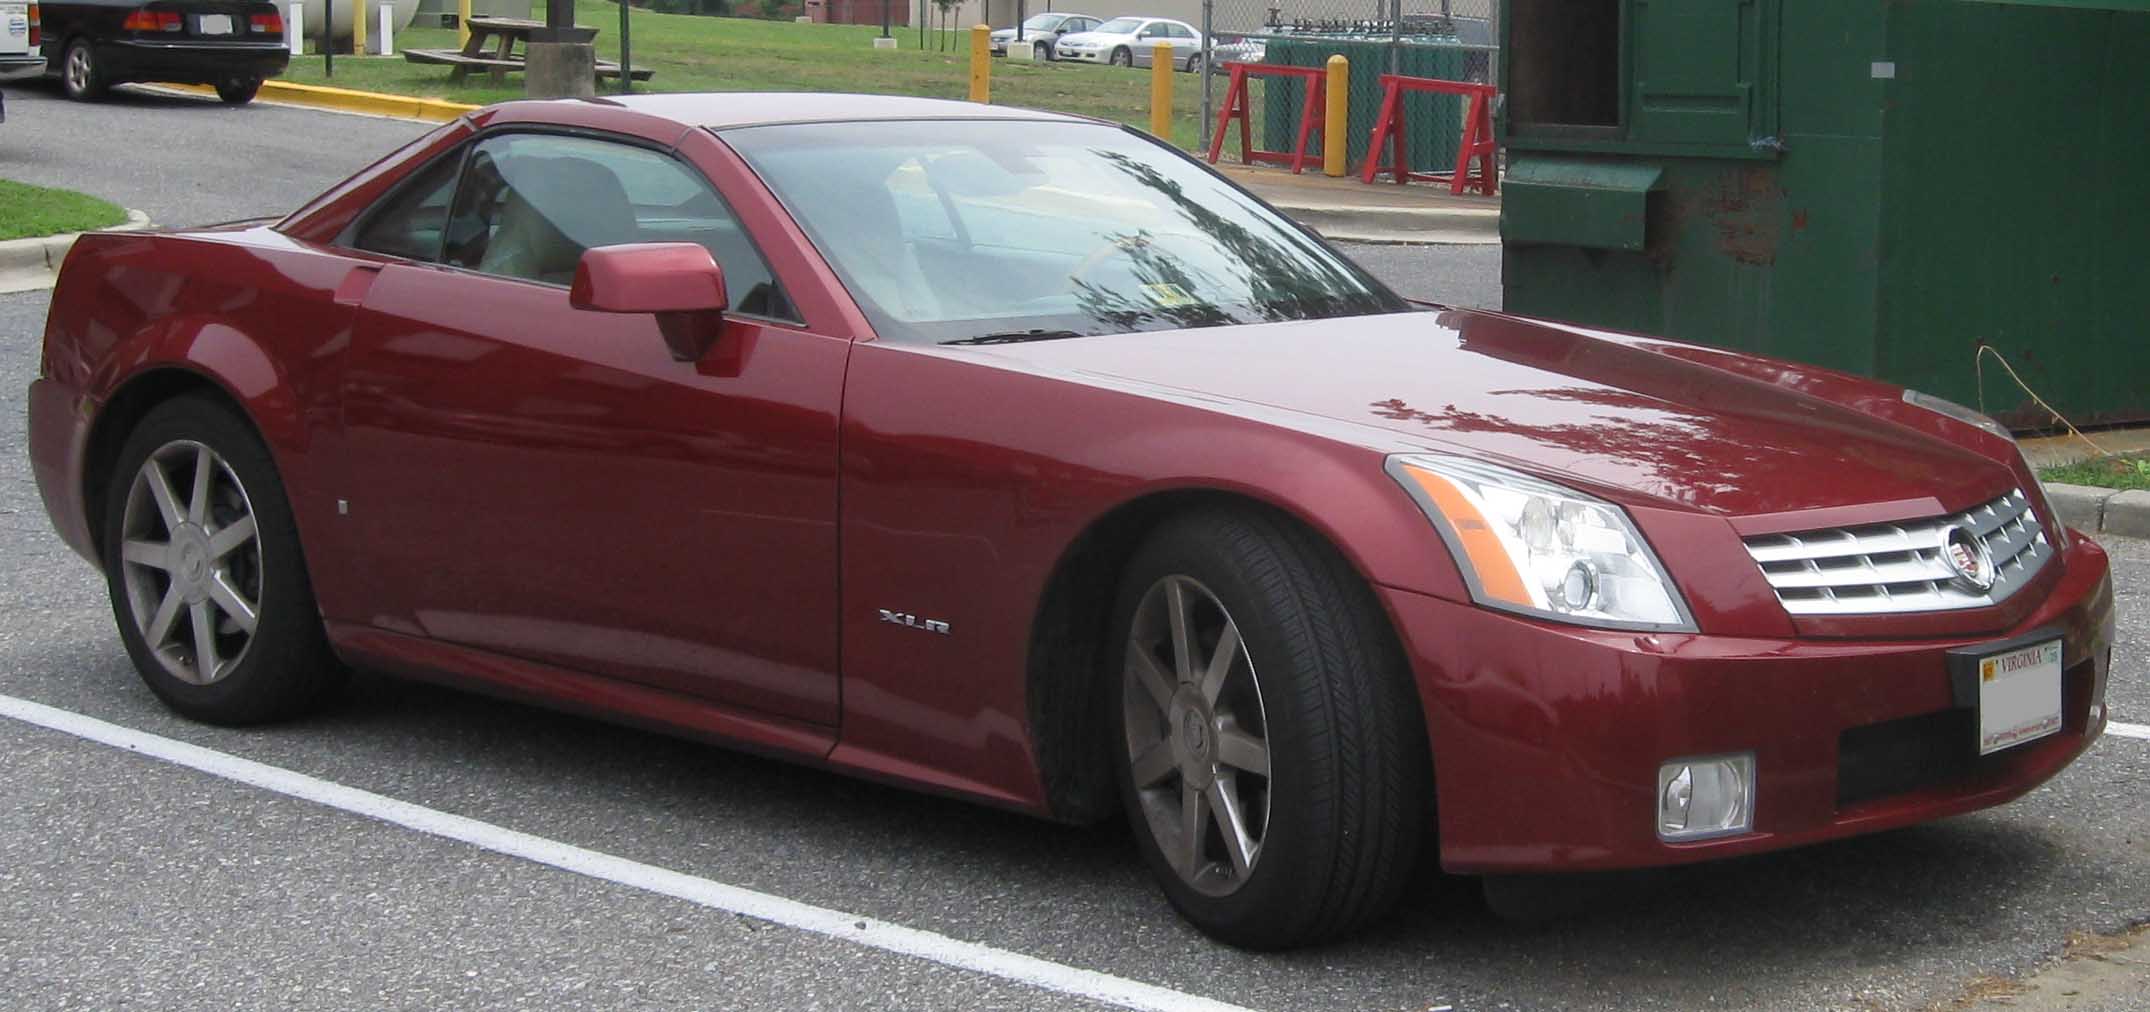 File:Cadillac XLR .jpg - Wikipedia